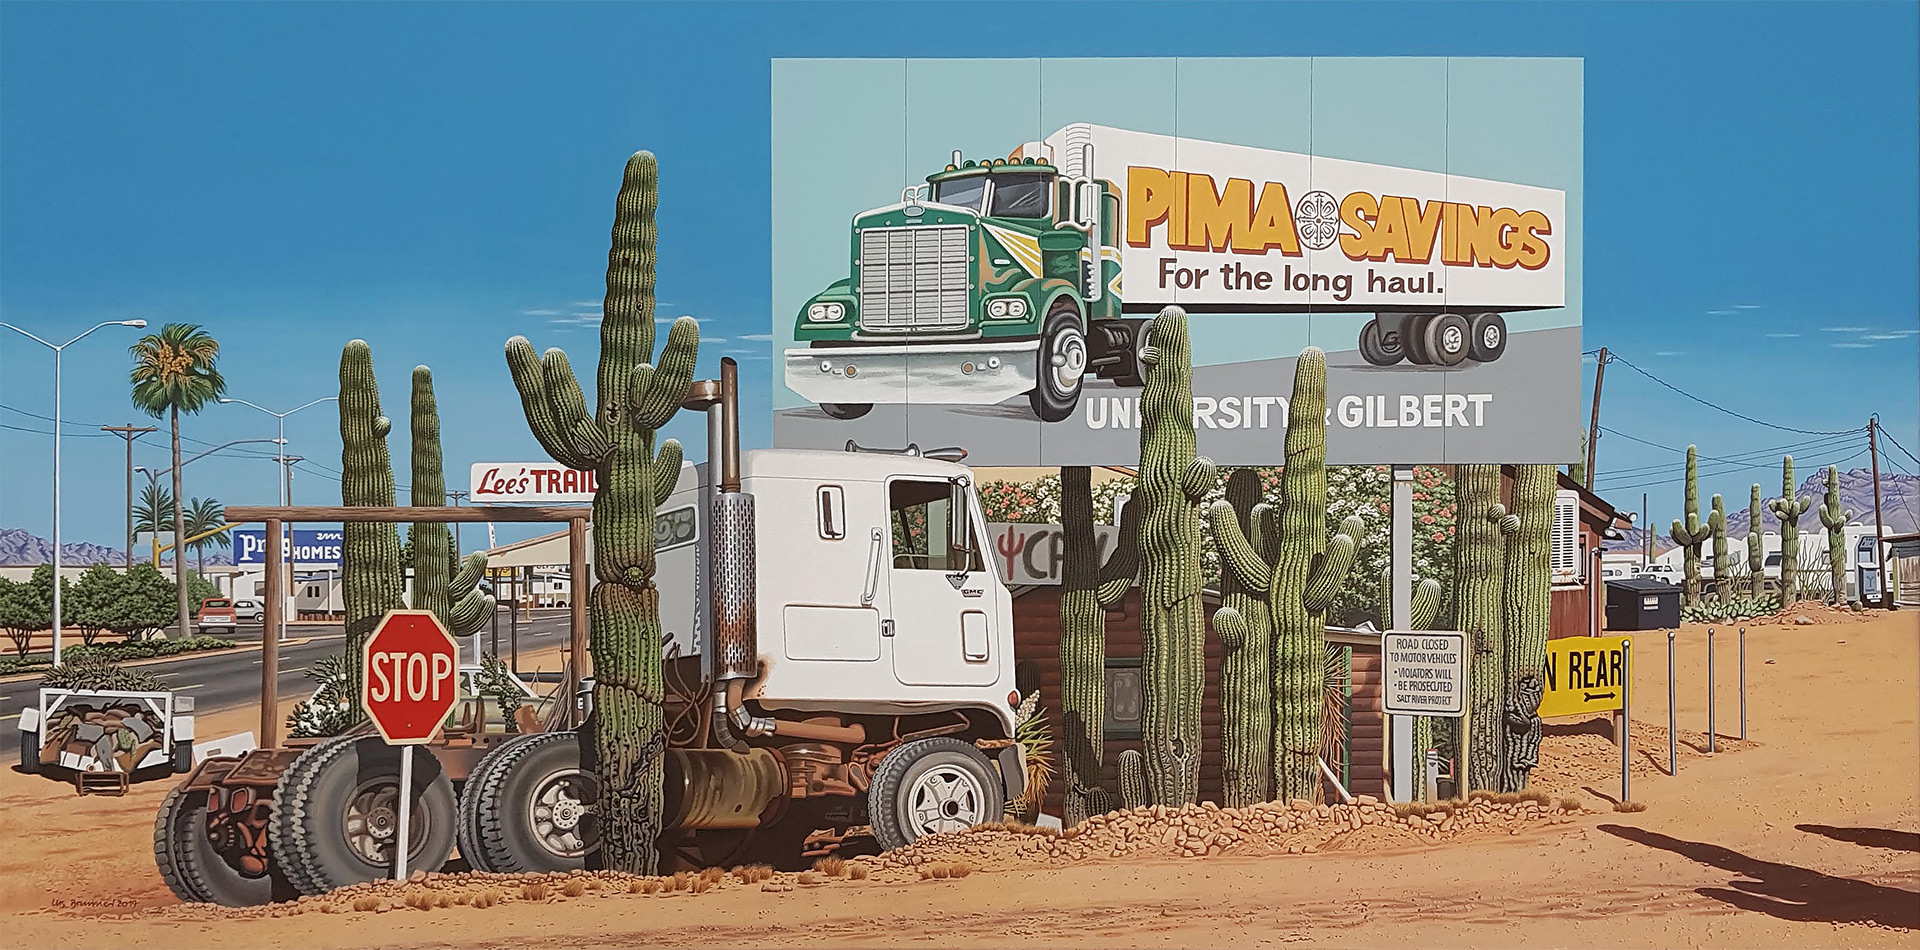 Pima Savings, 2019, Acryl auf Leinwand, 70 x 140 cm